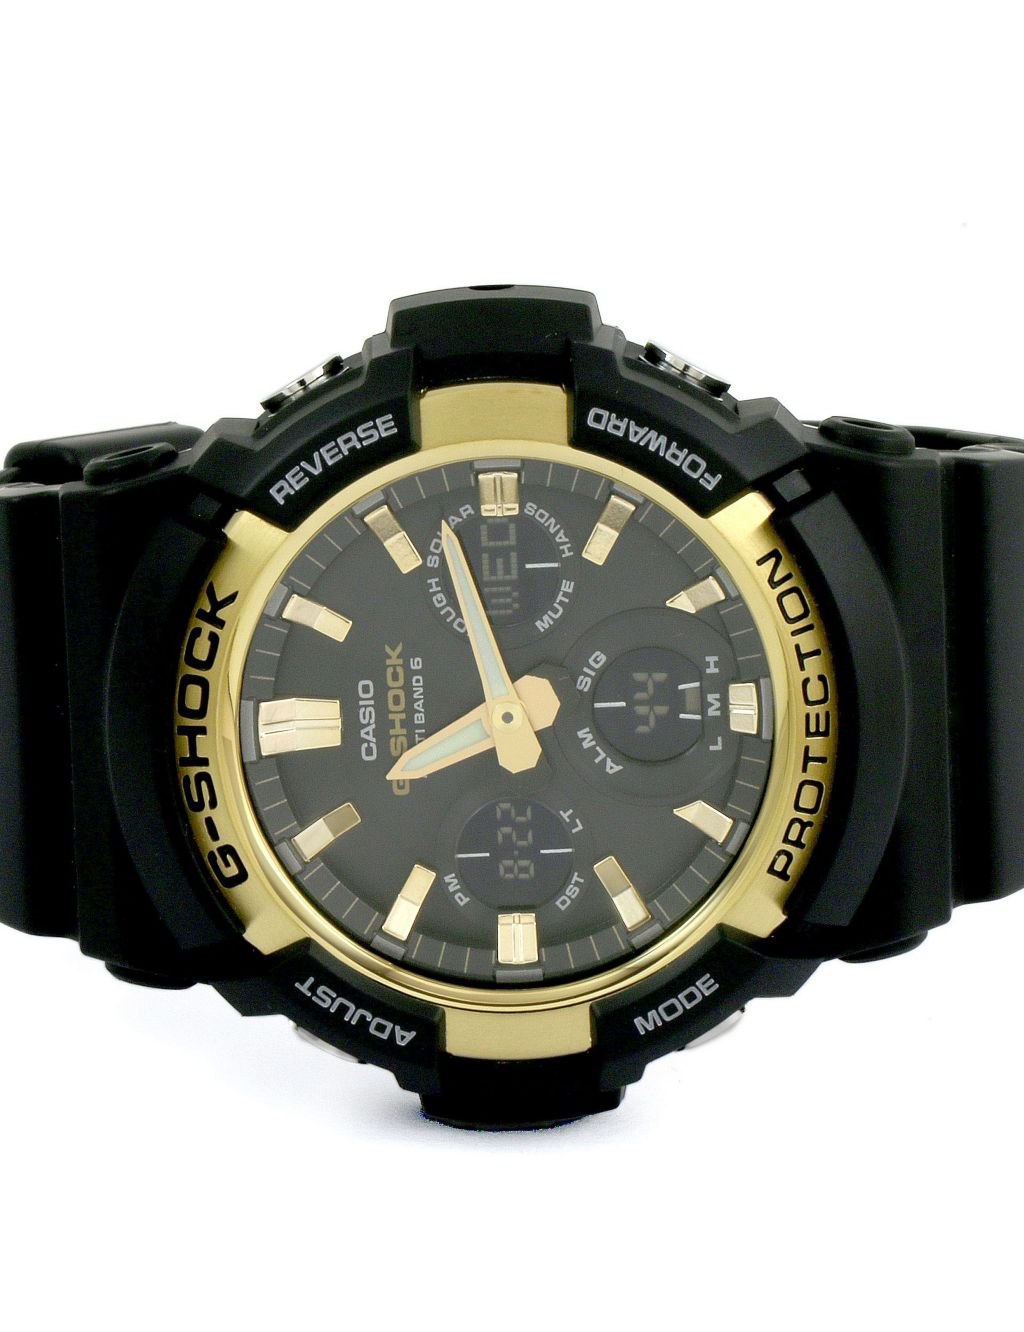 Casio G-Shock Waveceptor Resin Solar Watch image 2